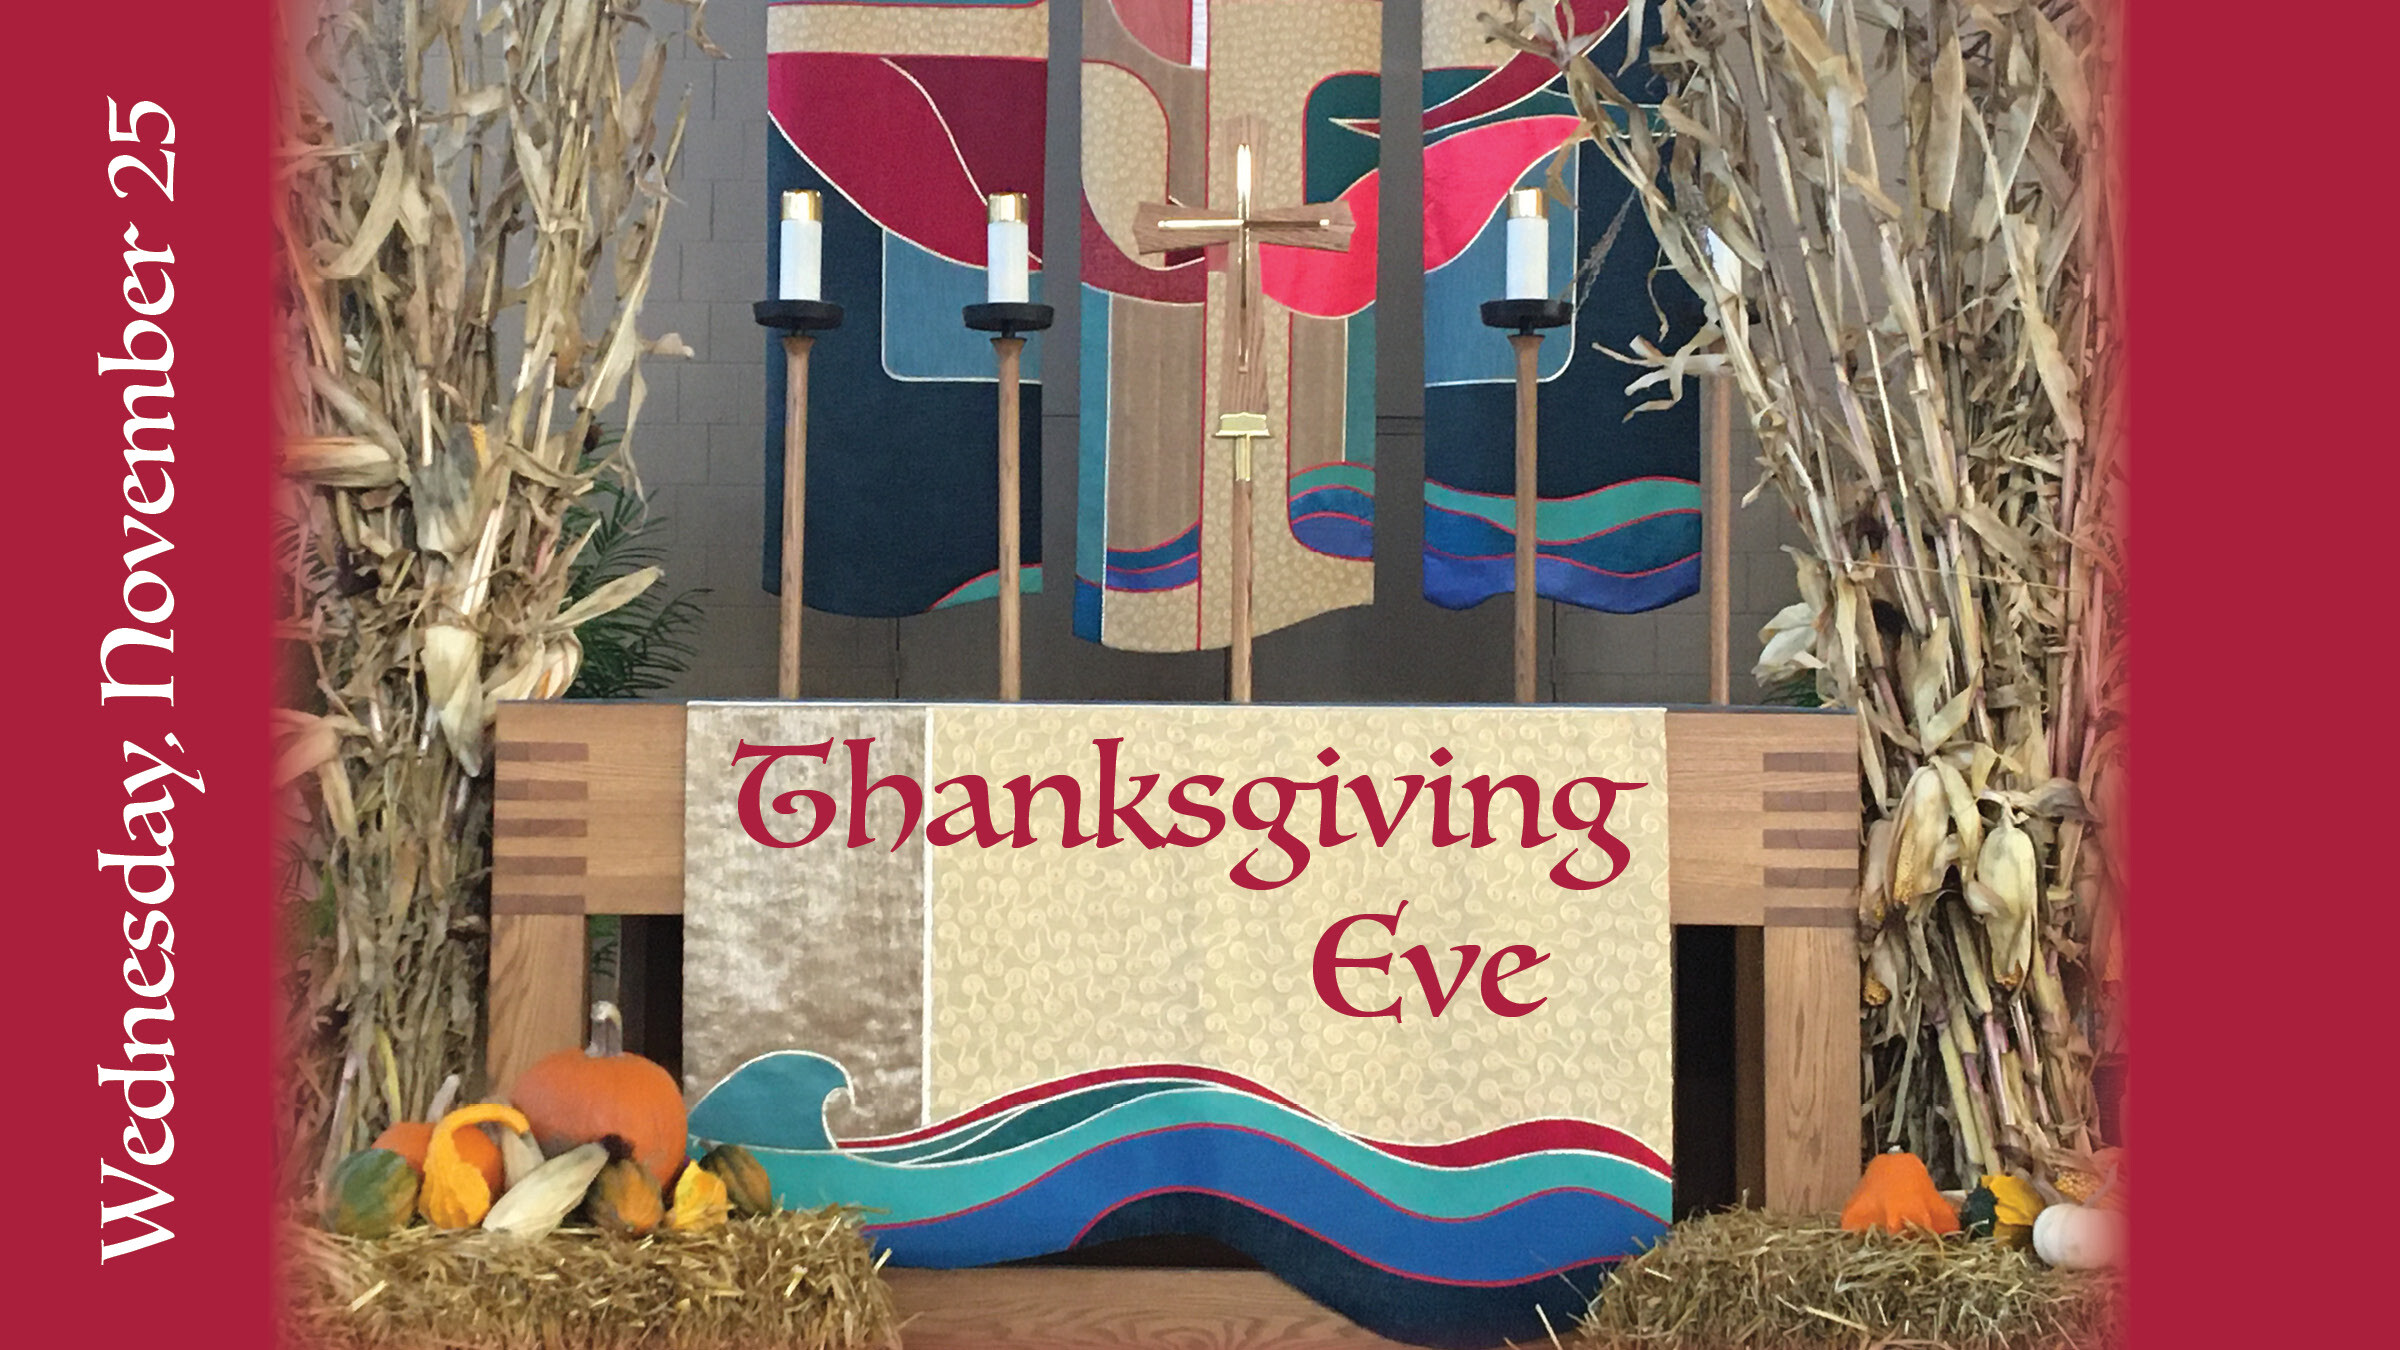 Thanksgiving Eve - November 25, 2020